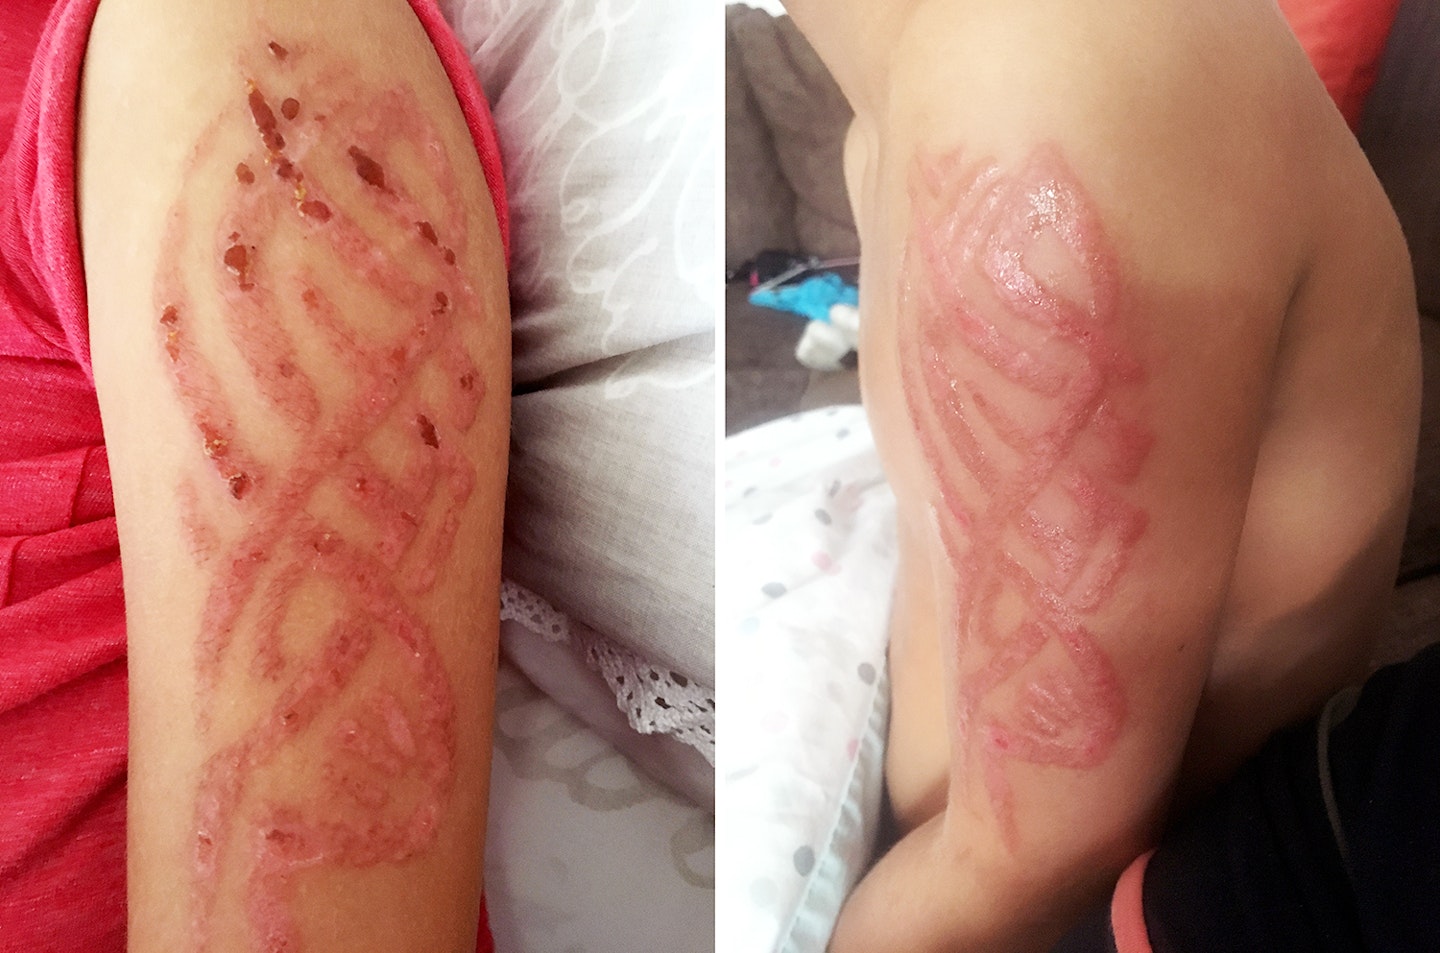 theo-alexandra-luckett-holiday-henna-tattoos-scarred-life-allergy-ppd